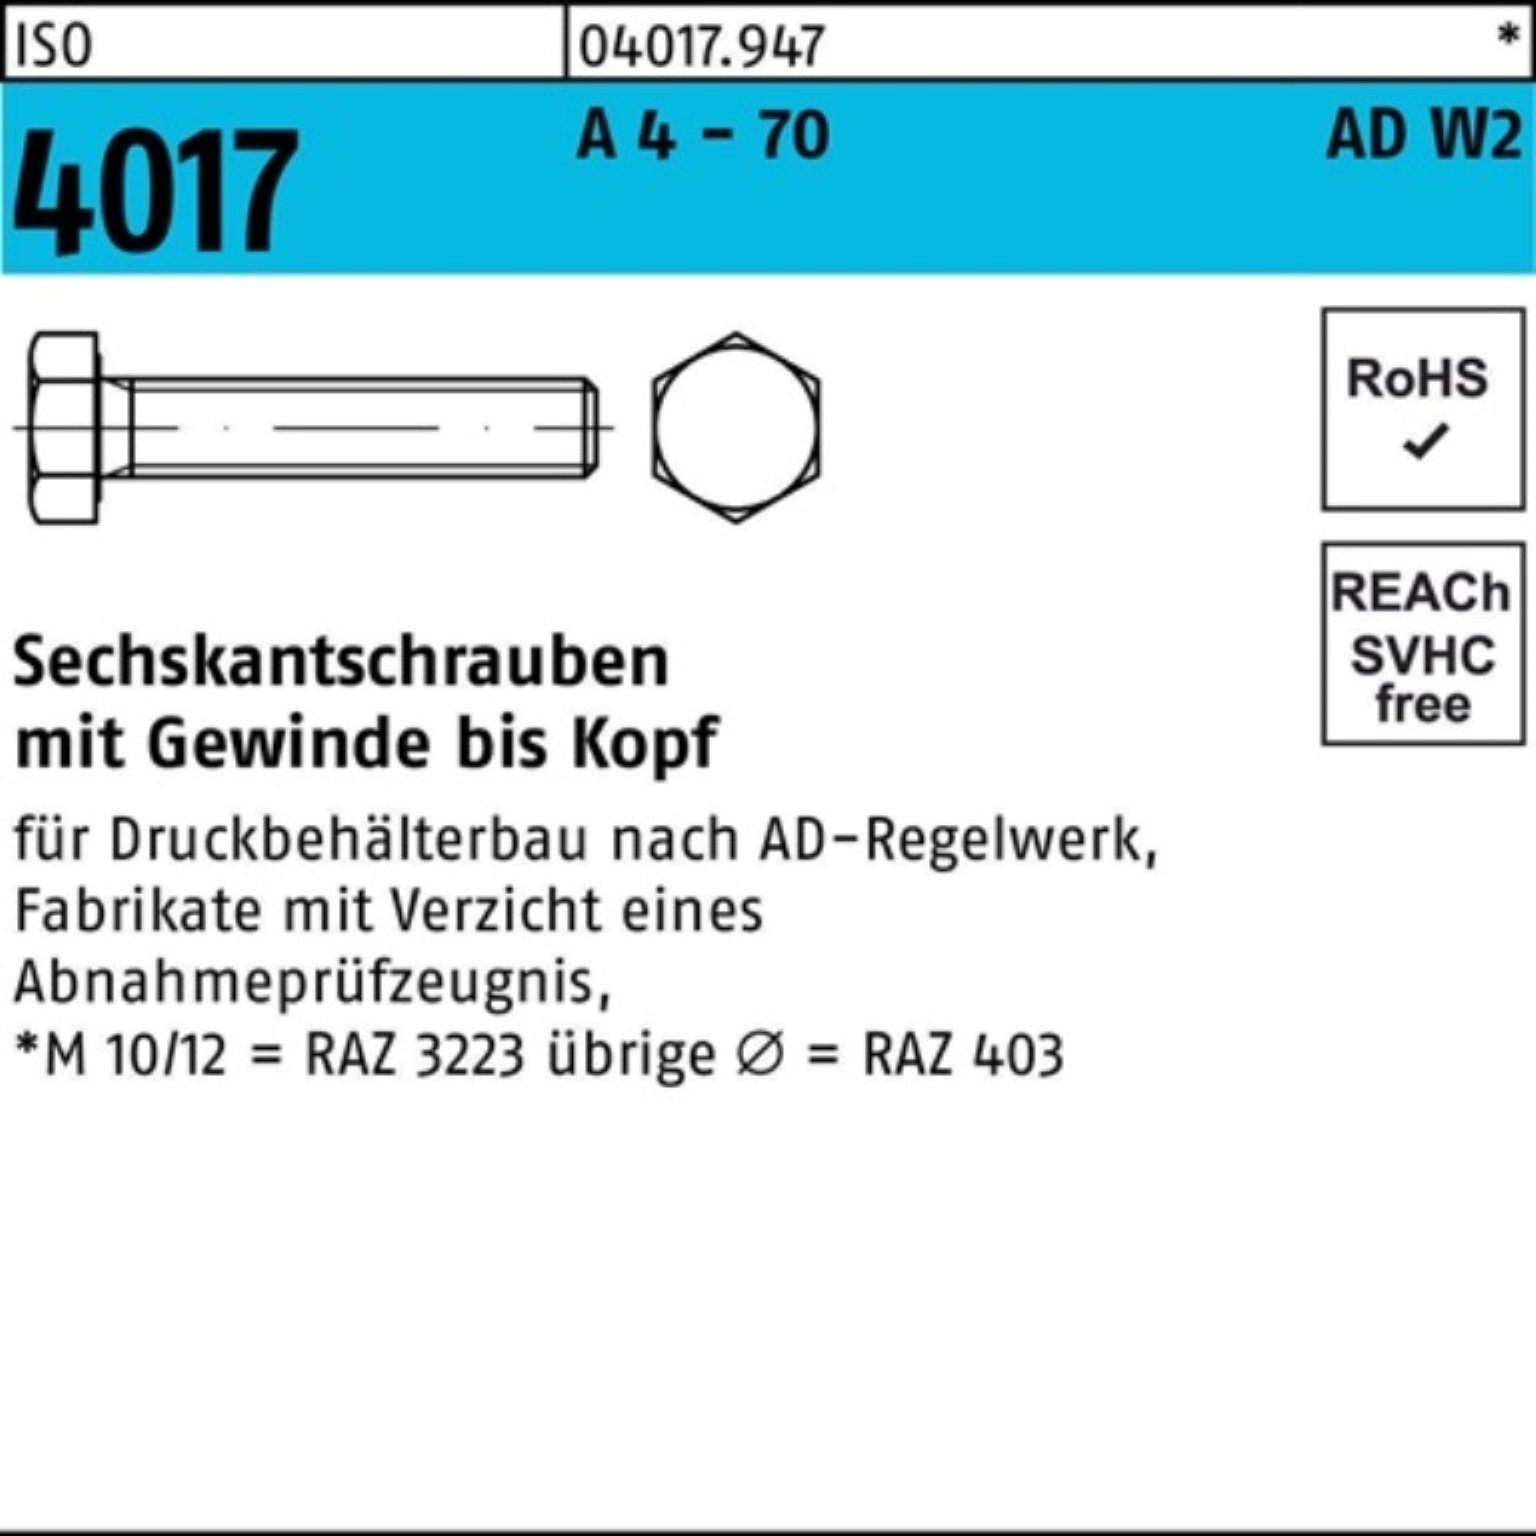 Bufab Sechskantschraube 100er Pack Sechskantschraube ISO 4017 VG M5x 10 A 4 - 70 AD-W2 100 St